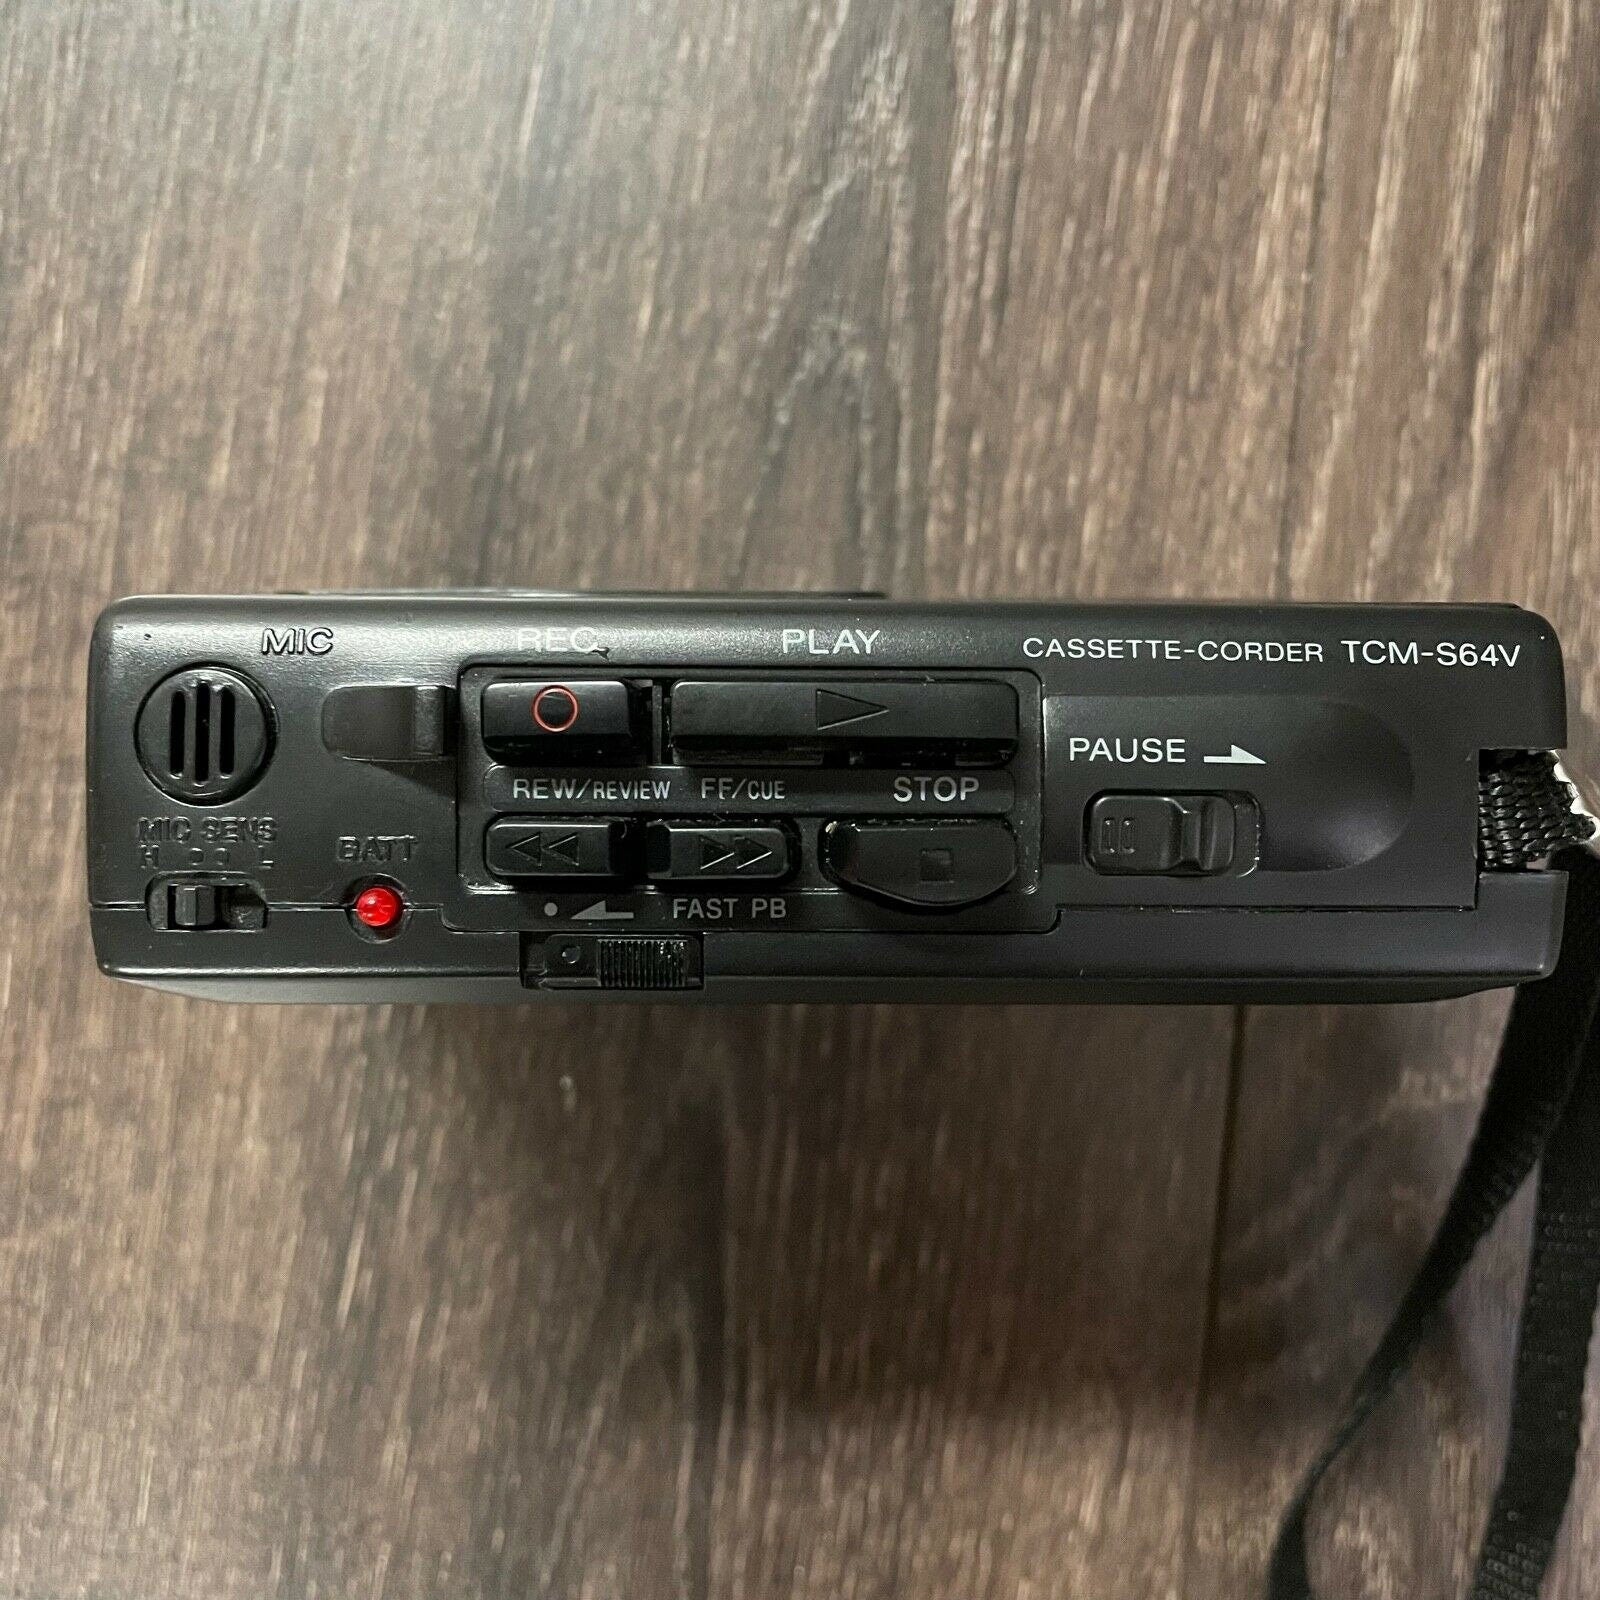 Sony TCM-S64V VOR Cassette Tape Recorder Handheld Voice Operated Walkman